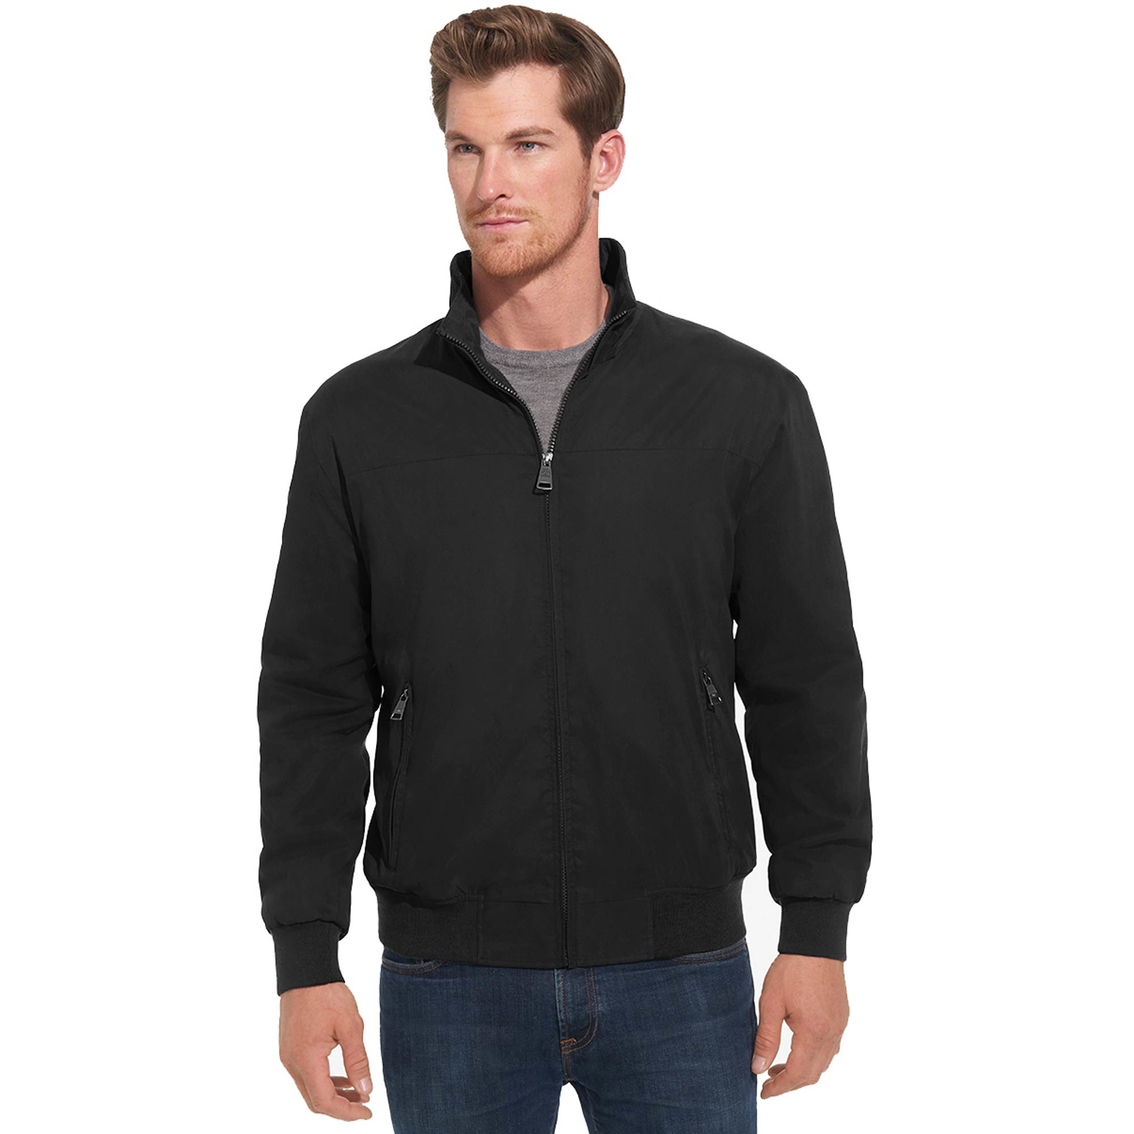 Weatherproof Microfiber Jacket | Jackets | Clothing & Accessories ...